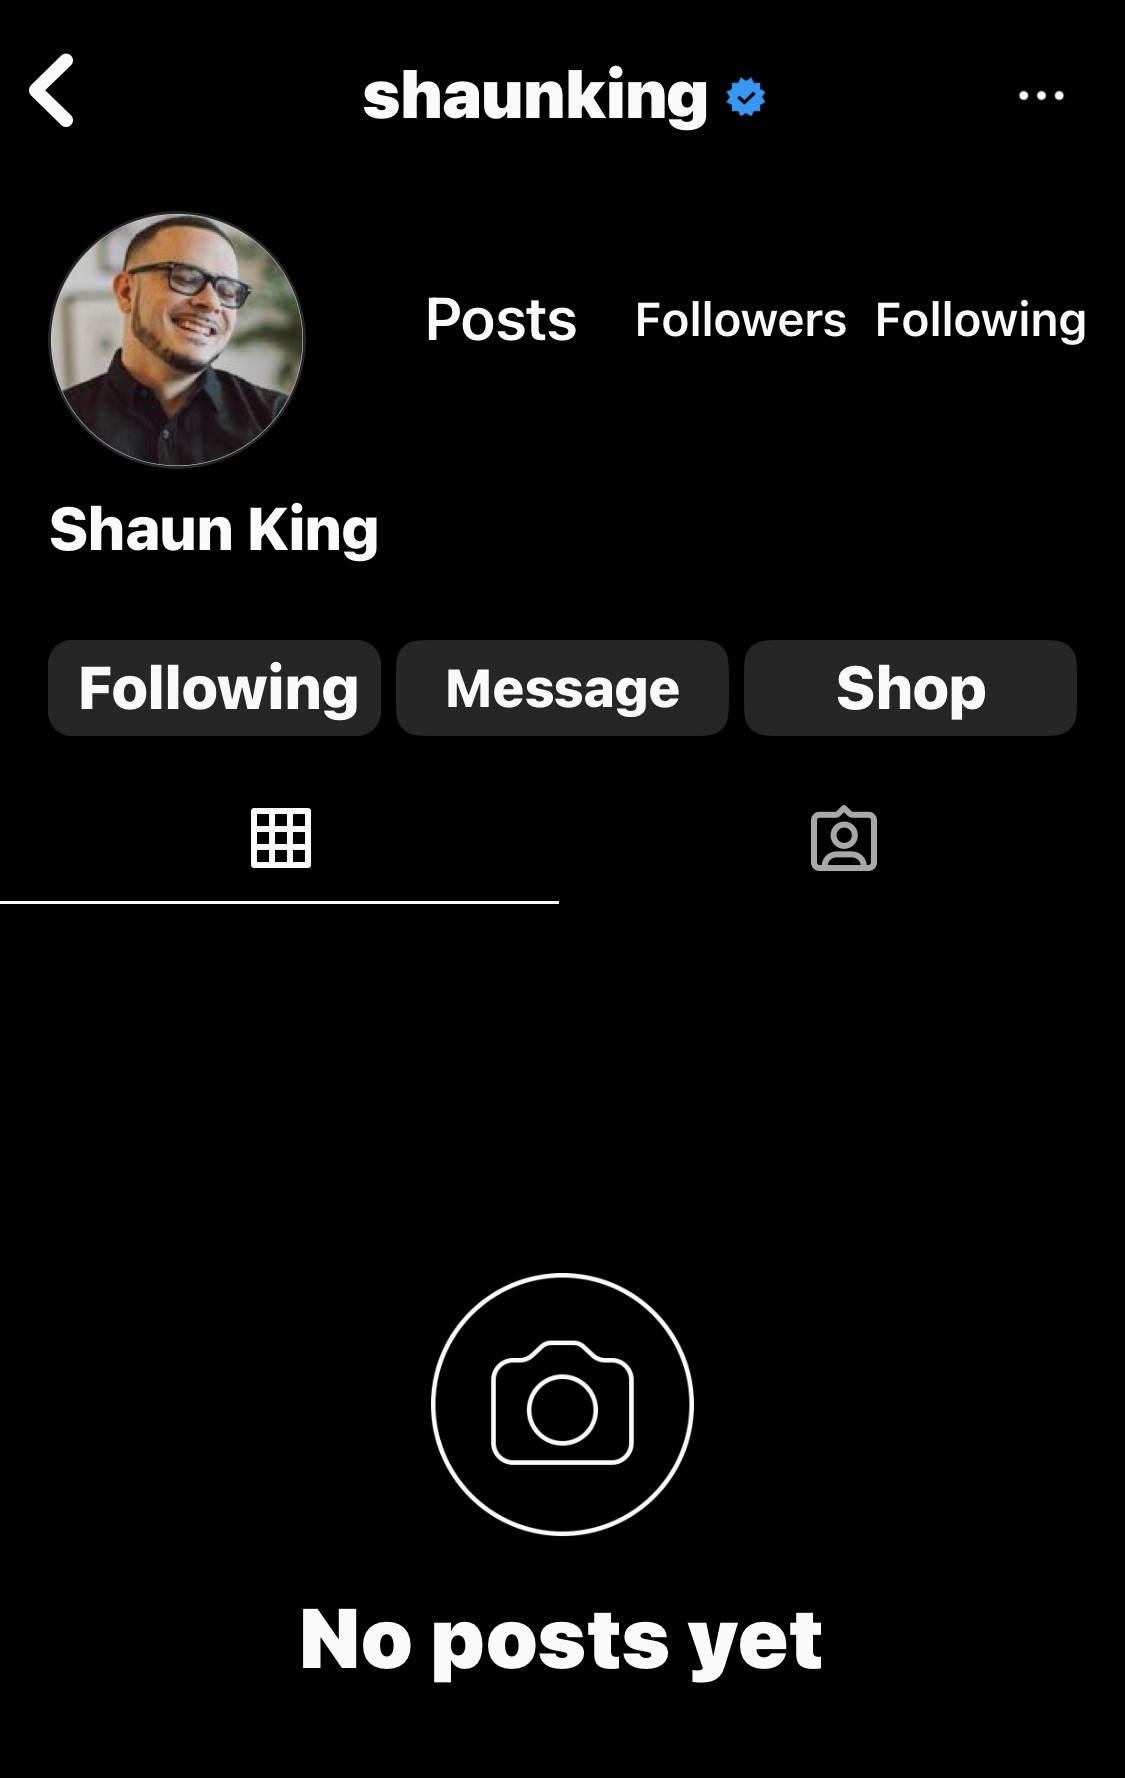 @shaunking Instagram account blocked by Meta